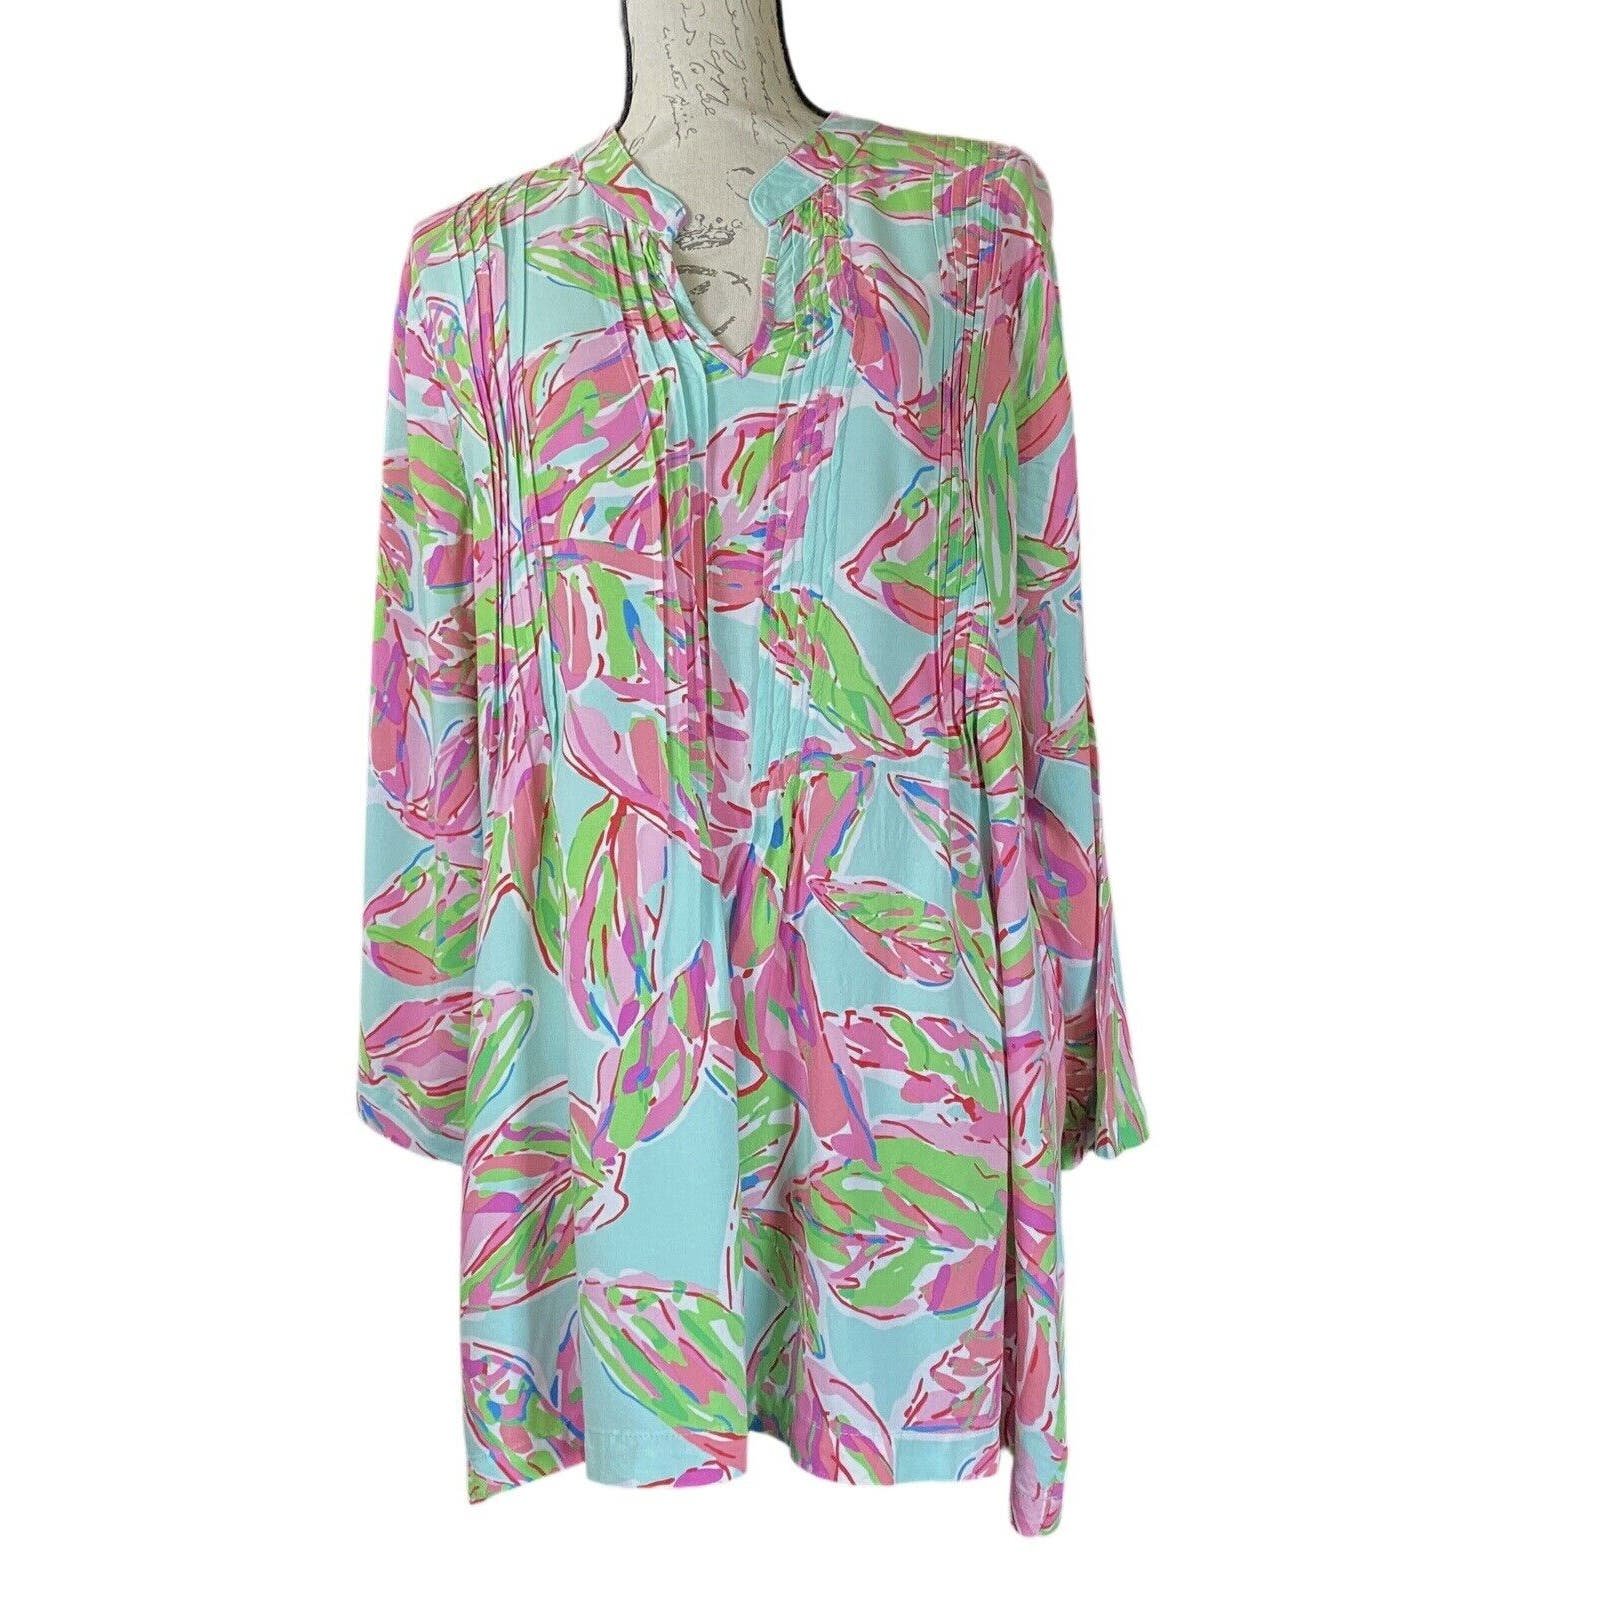 good price Lilly Pulitzer Sarasota Womens XL Tunic Dress Pintuck Pink/Green Tropical Print o6efwcMPz online store